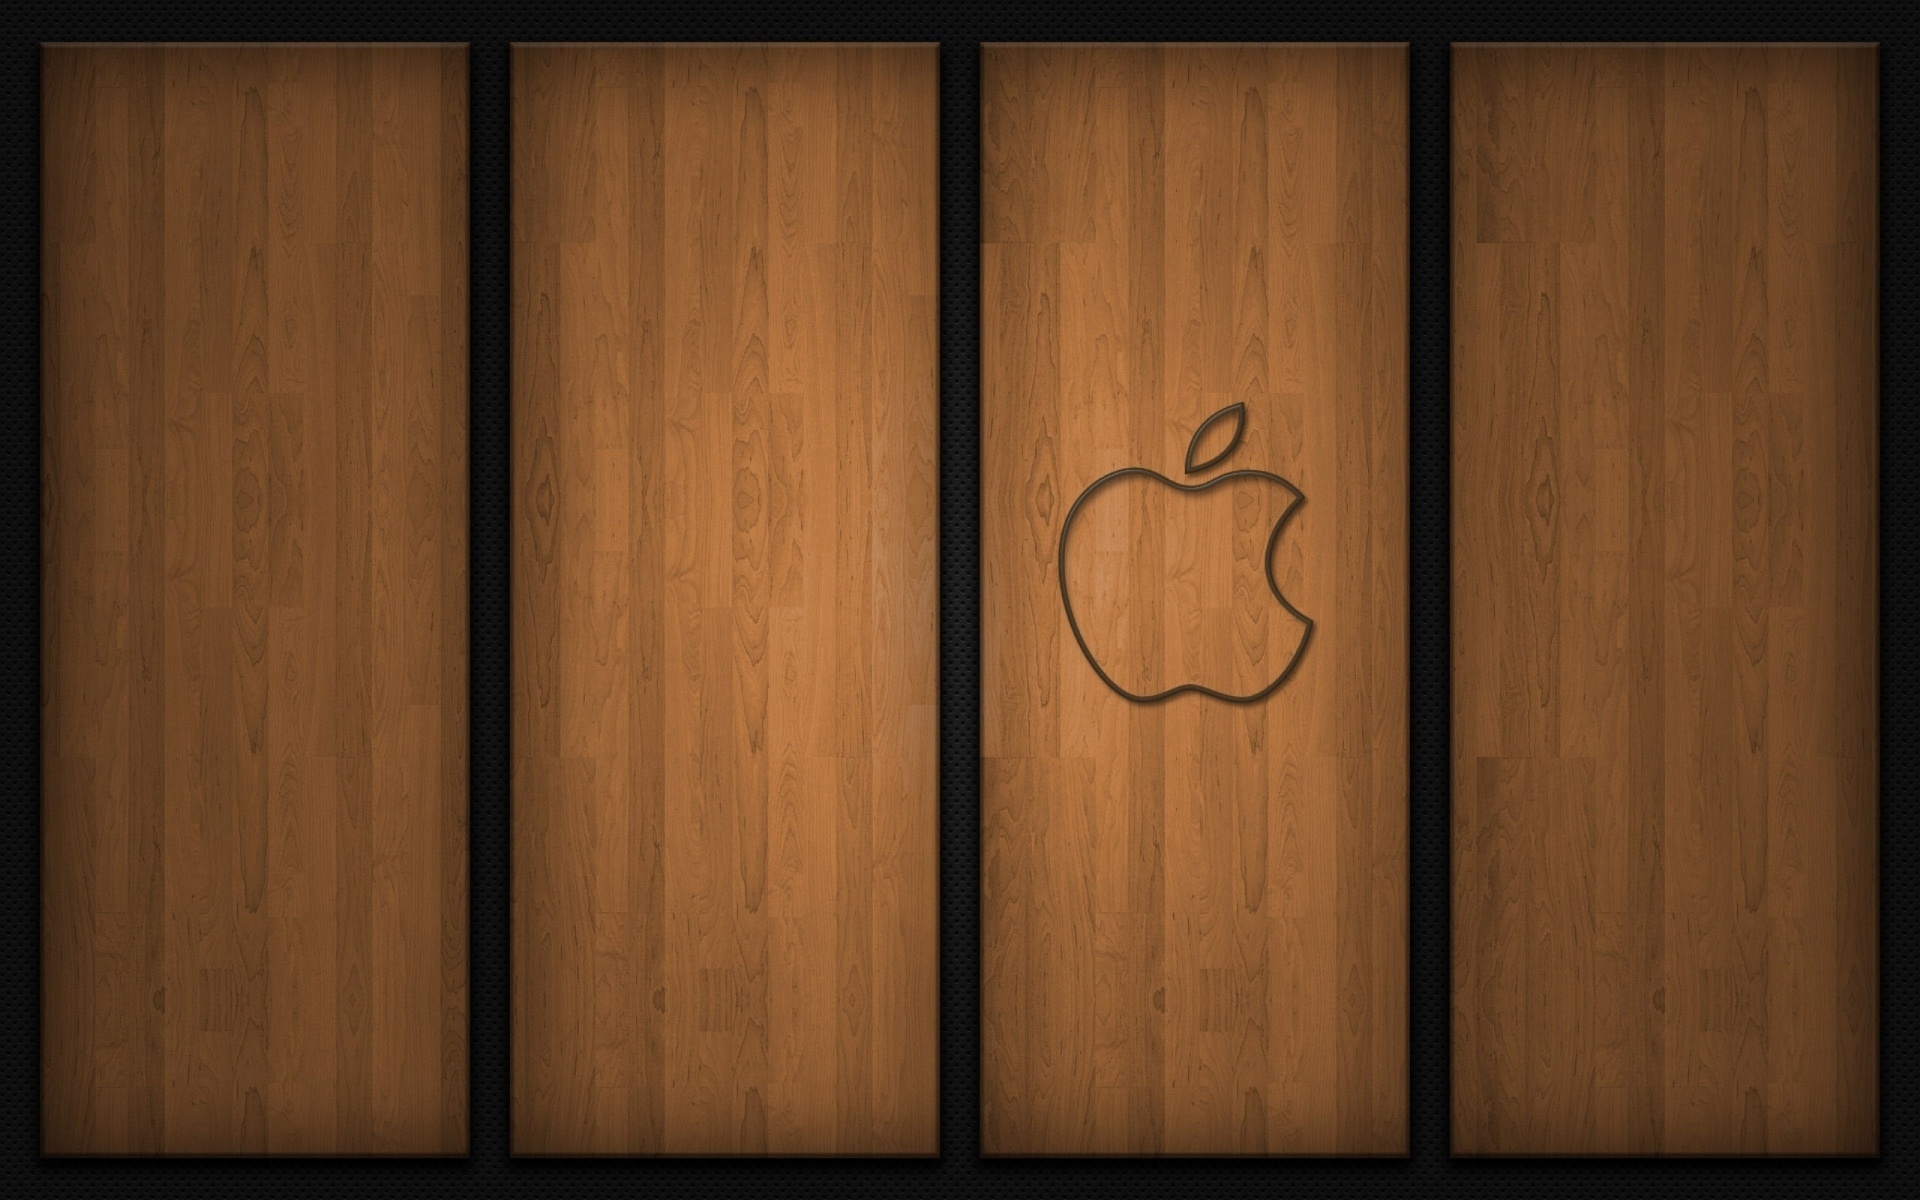 Download wallpaper for 320x240 resolution | Apple logo on wood | brands ...